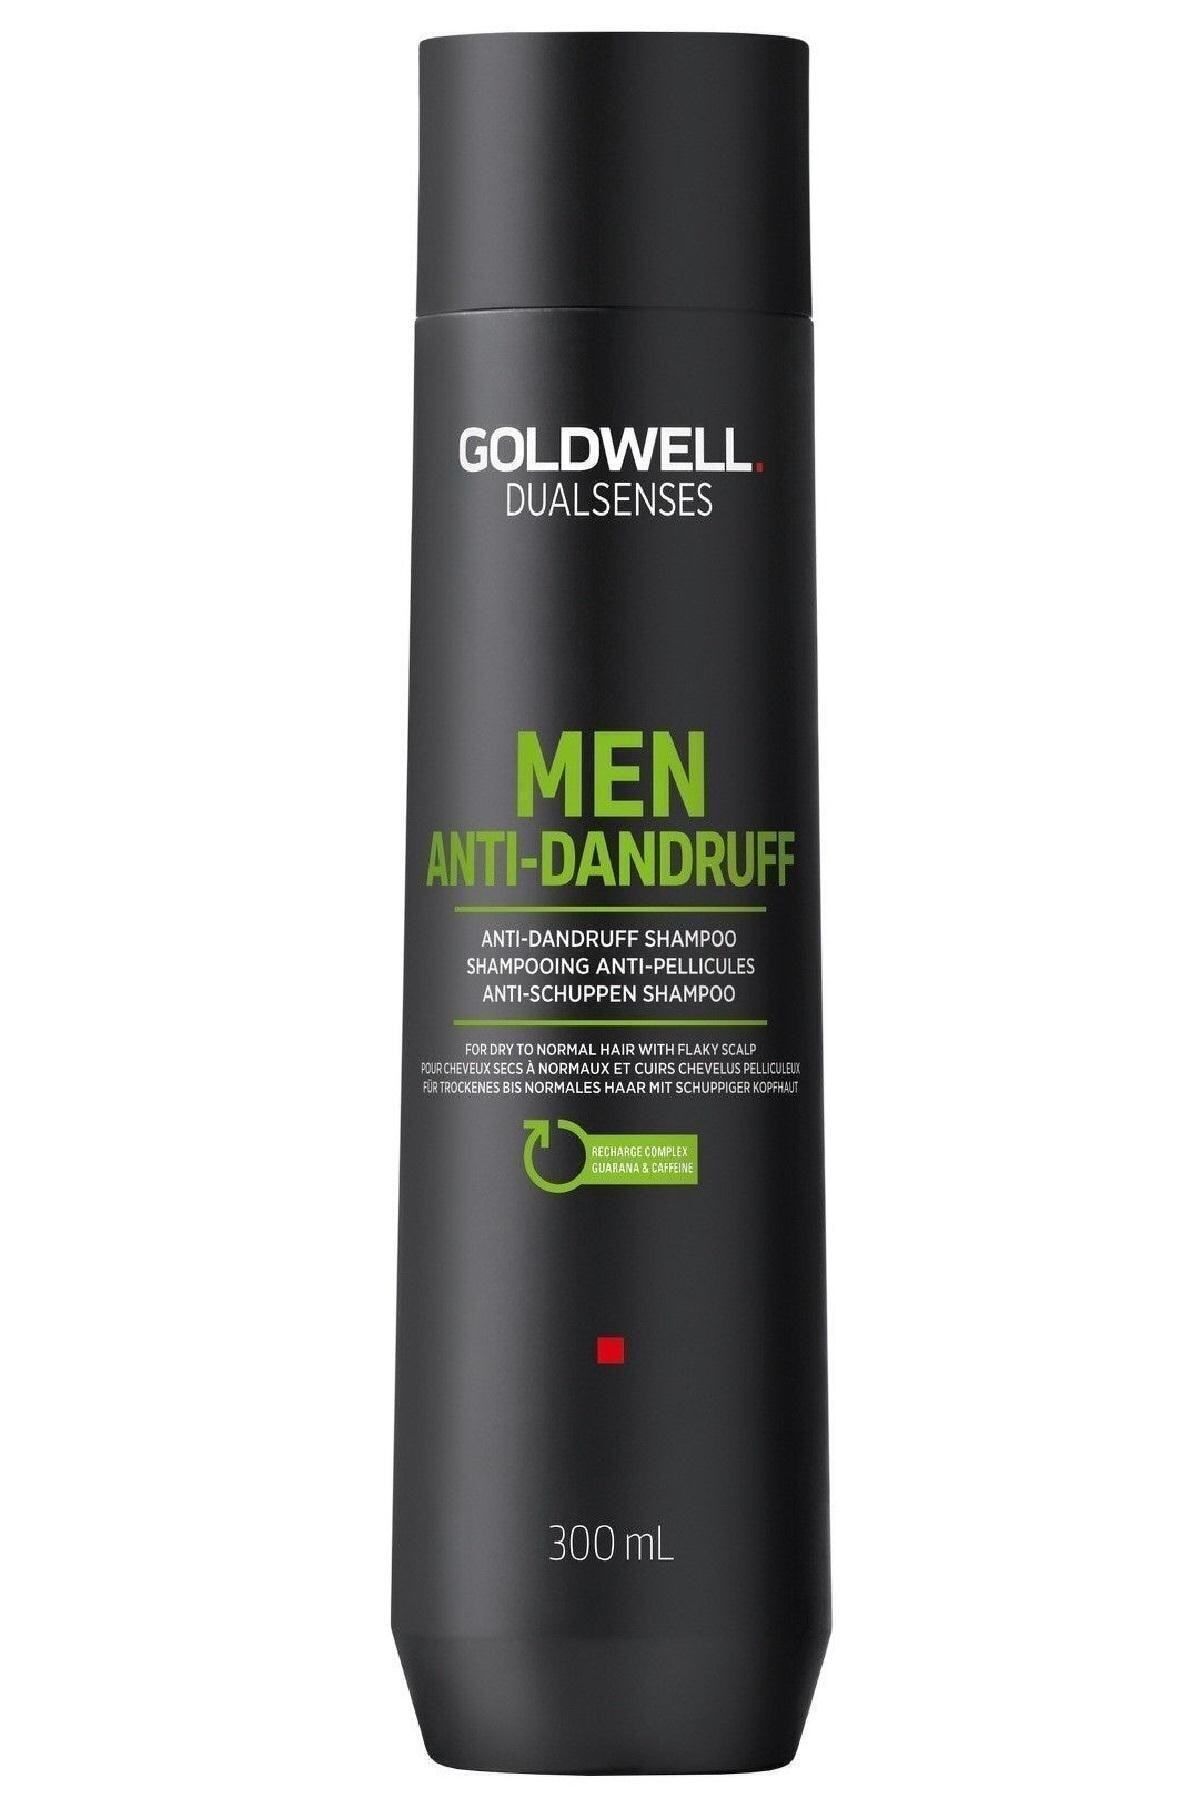 GOLDWELL Dualsenses Men Anti-Dandruff Erkeklere Özel Kepek Önleyici Şampuan (300ml)